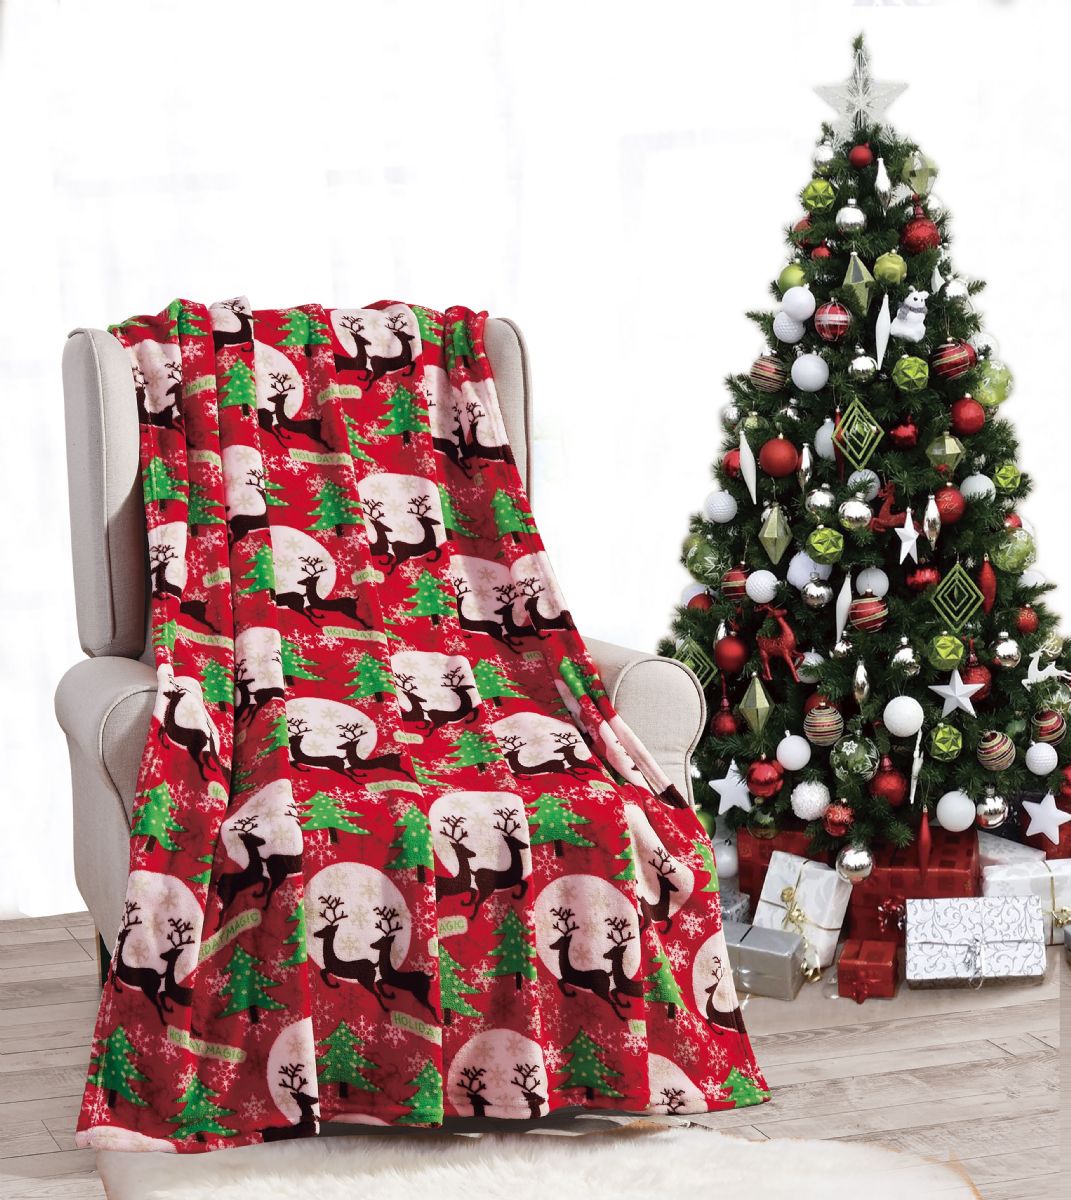 12 Pieces Holiday Magic Holiday Throw Design Micro Plush Throw Blanket 50x60 Multicolor - Micro Plush Blankets